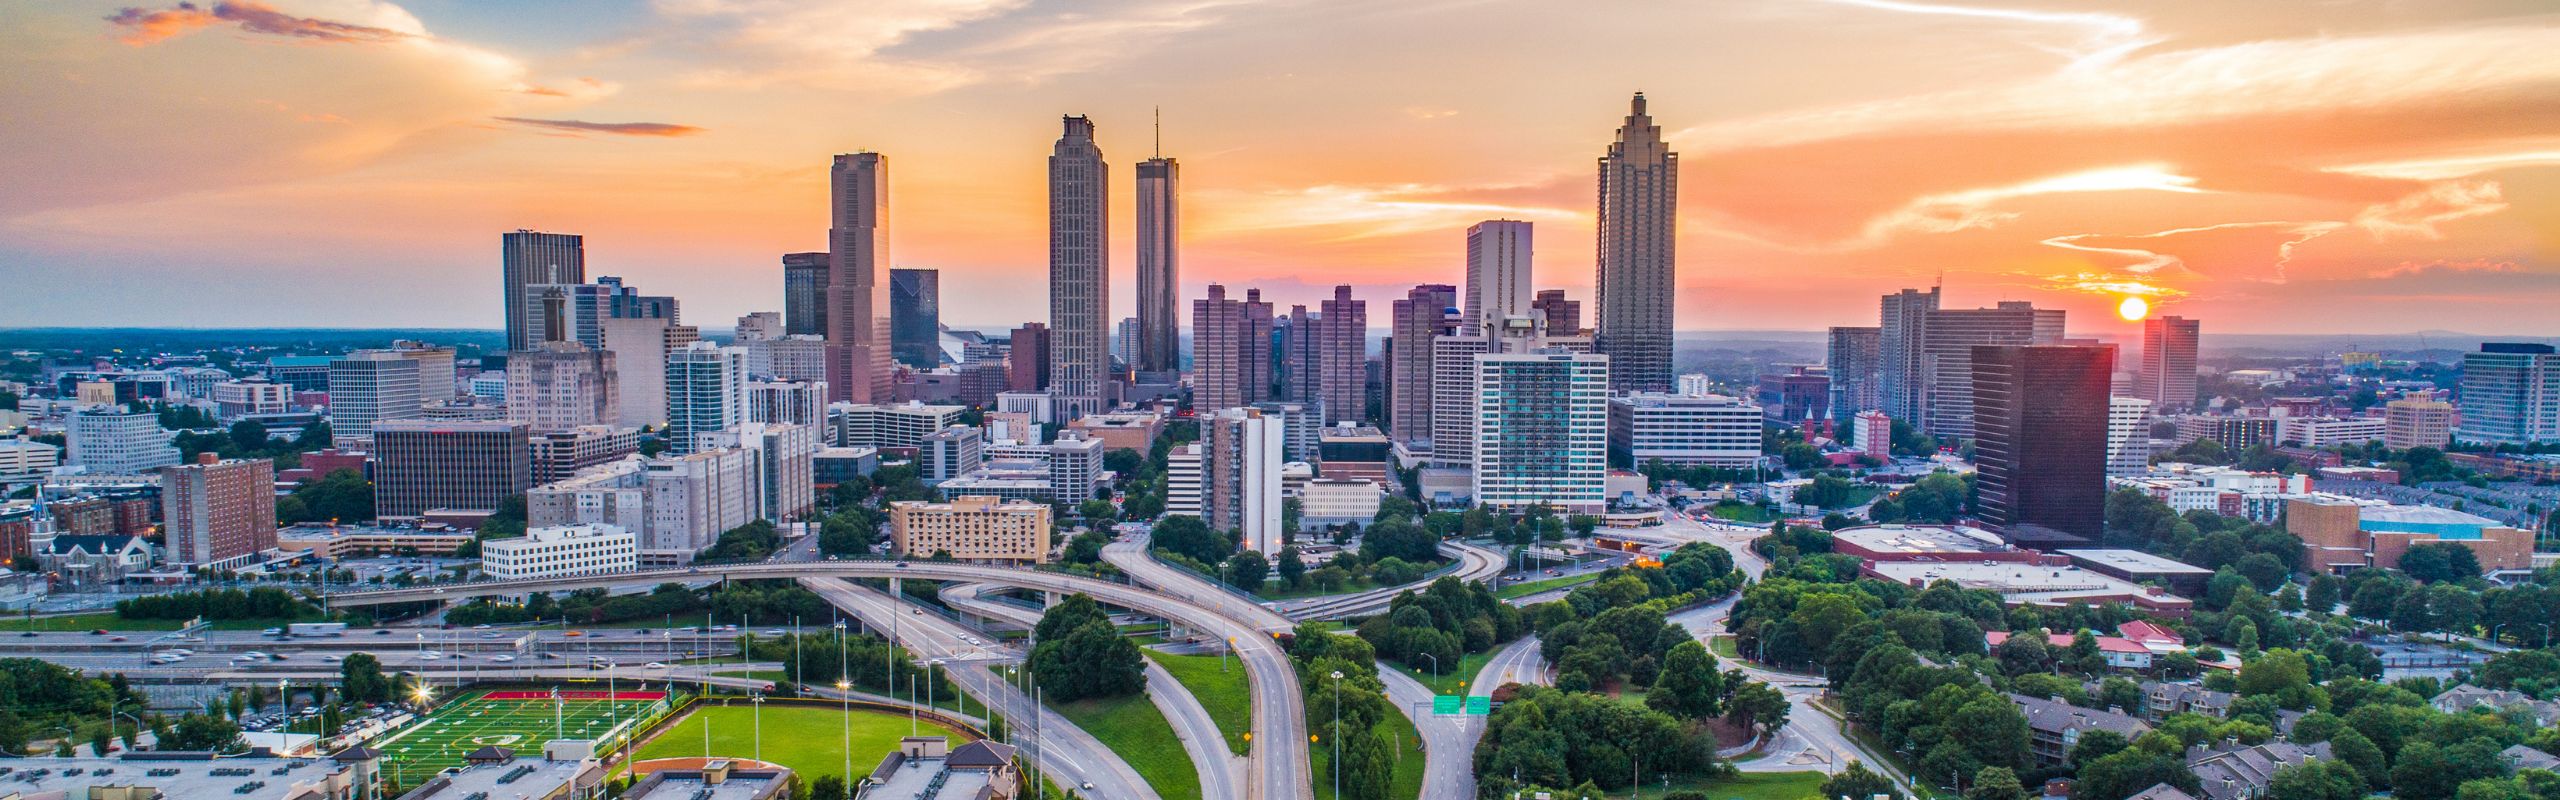 Atlanta skyline buildings